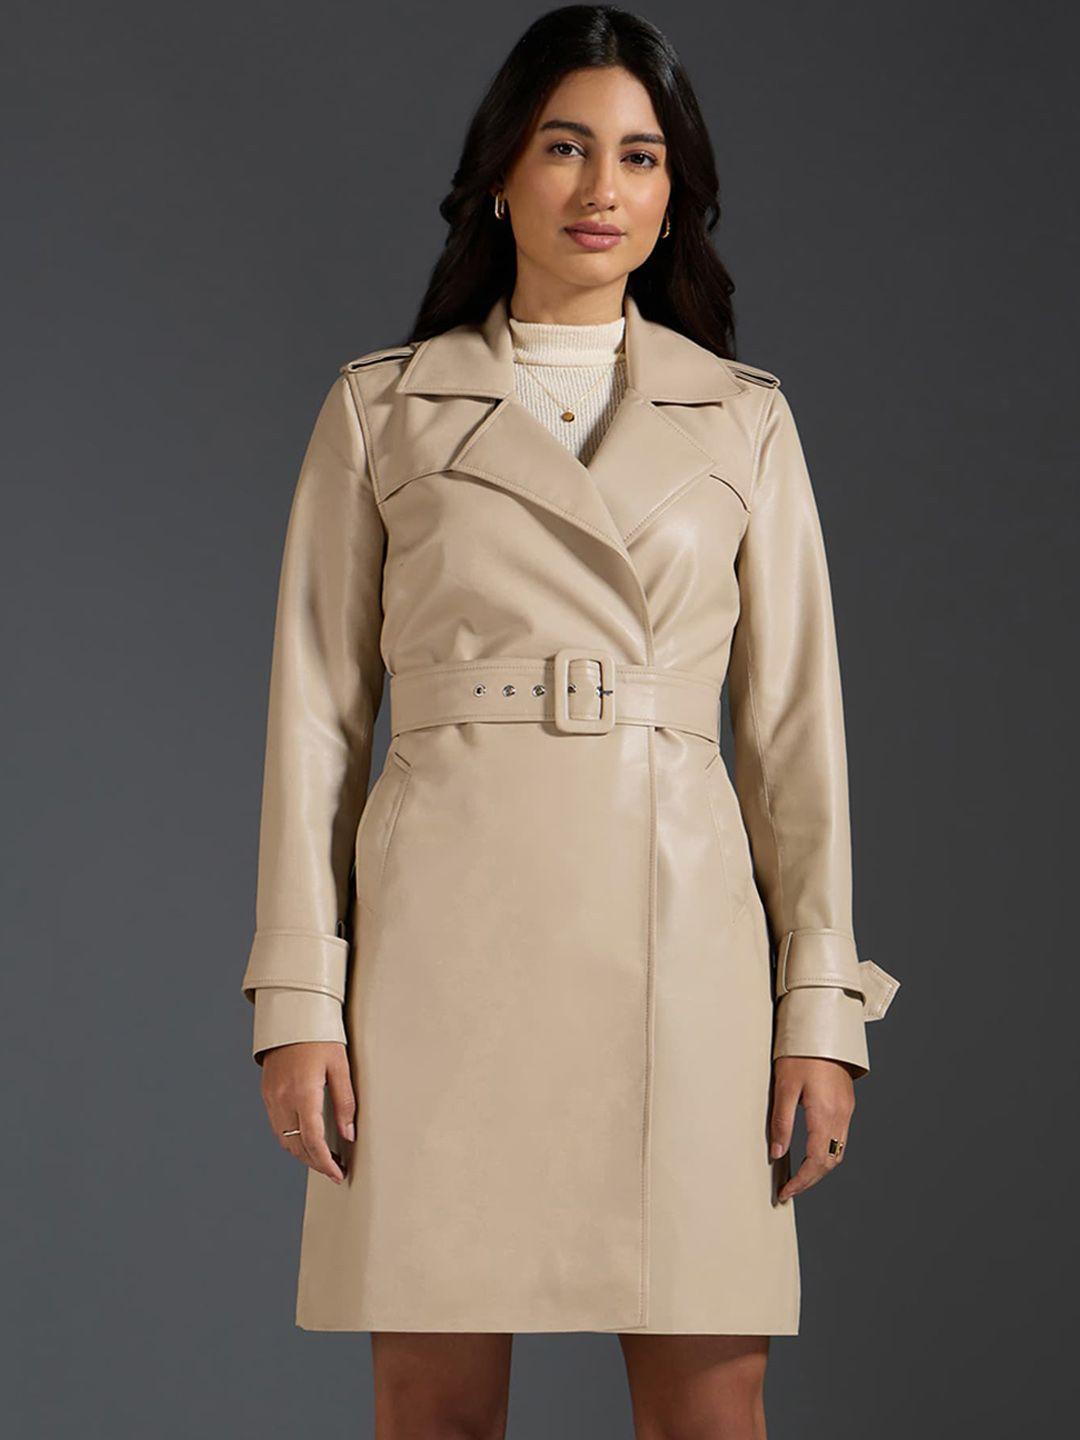 20dresses notched lapel collar shoulder tabs detail overcoat